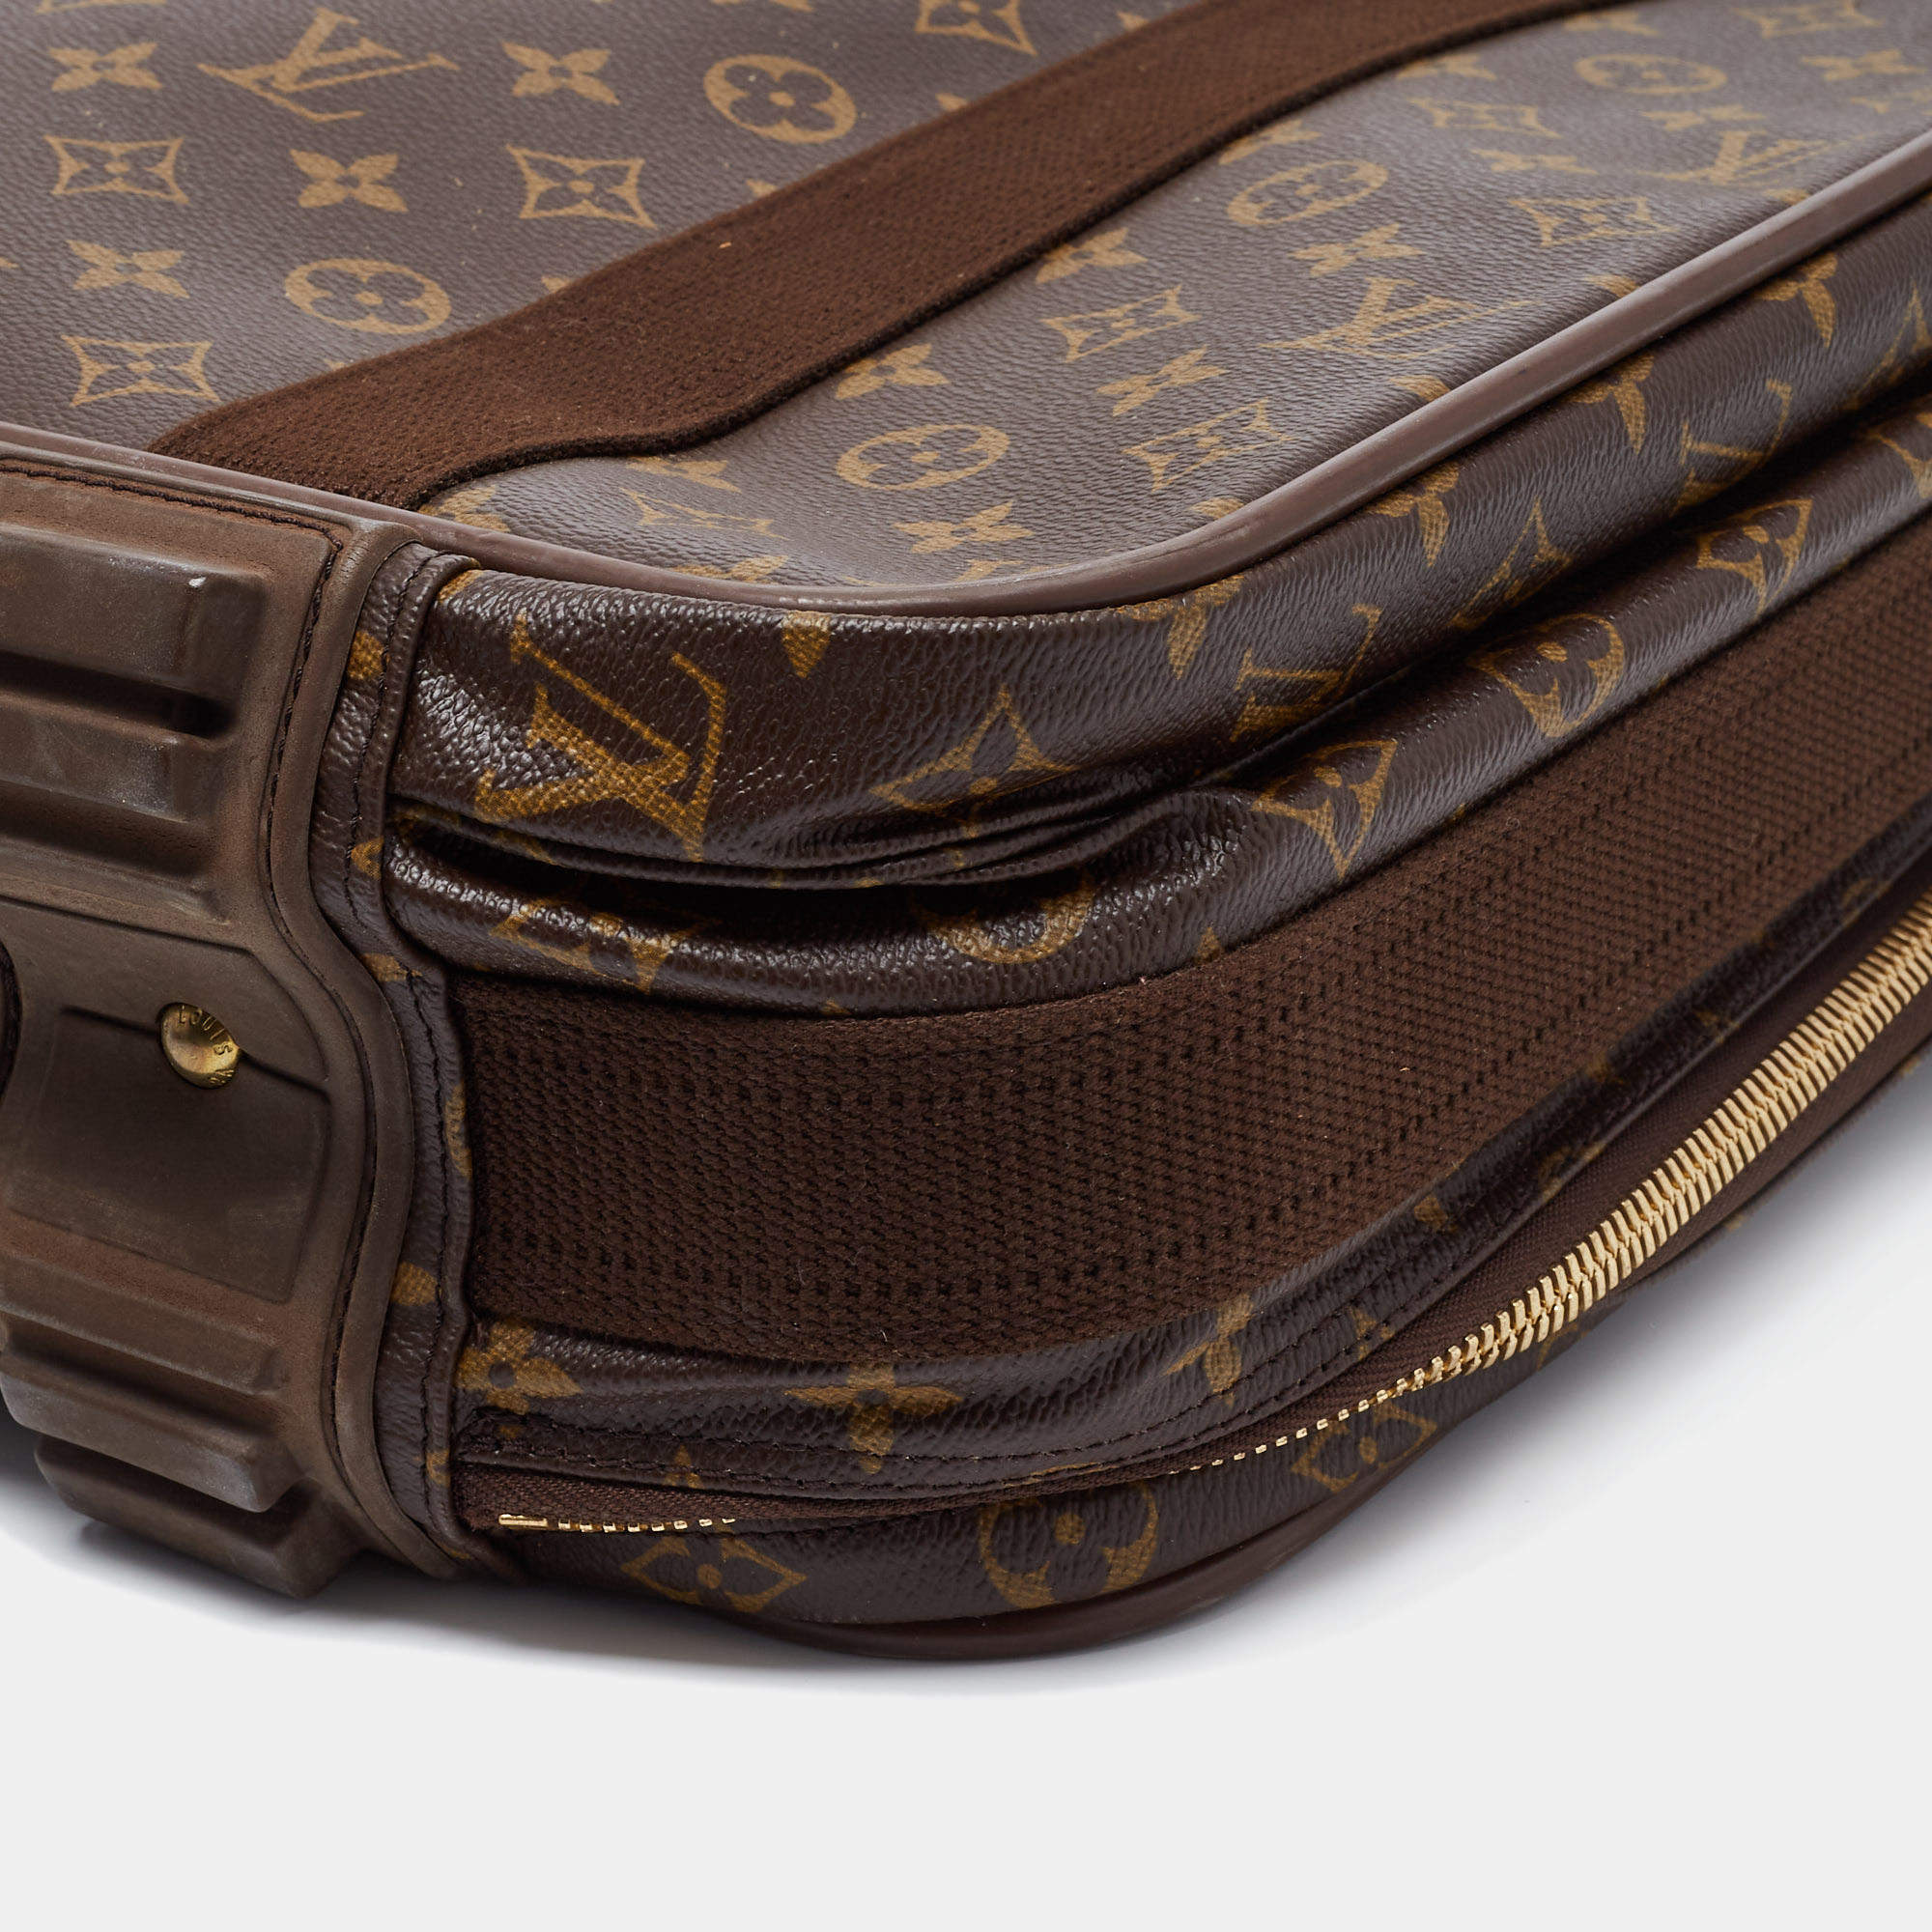 Auth Louis Vuitton Monogram Satellite 53 Travel Shoulder bag 0J210020n